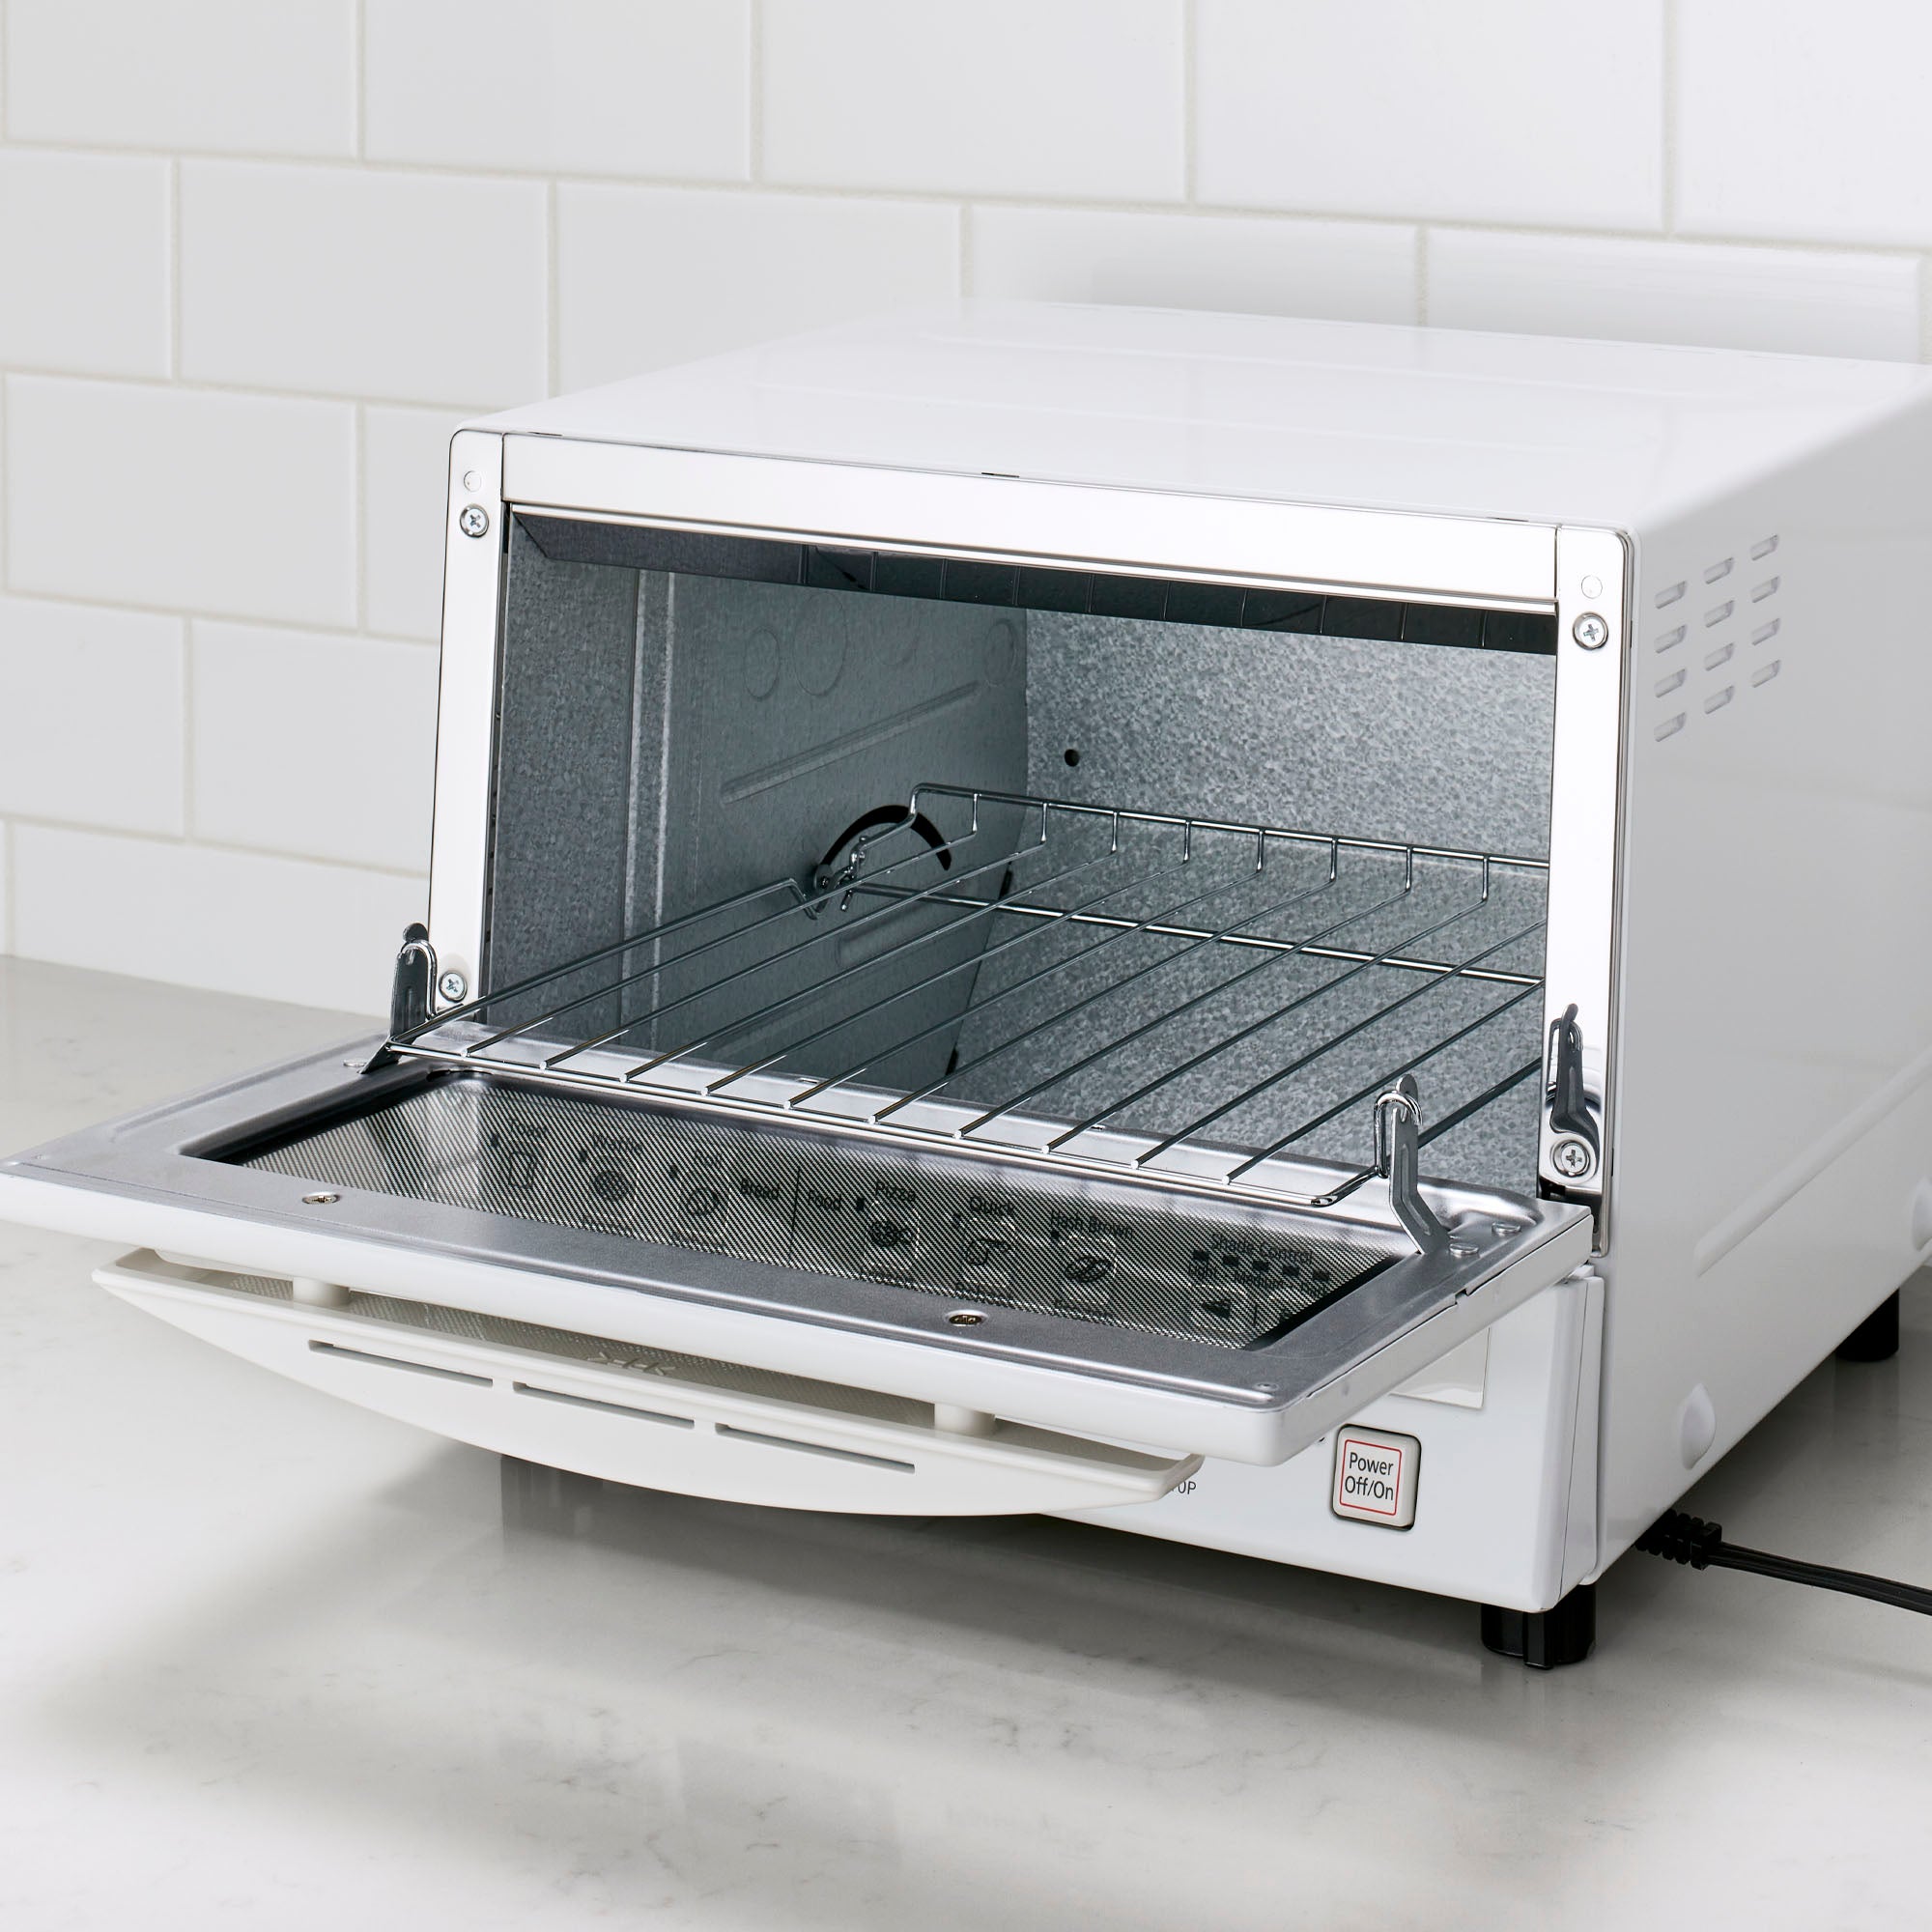 Panasonic NB G110P Flash Xpress Toaster Oven 